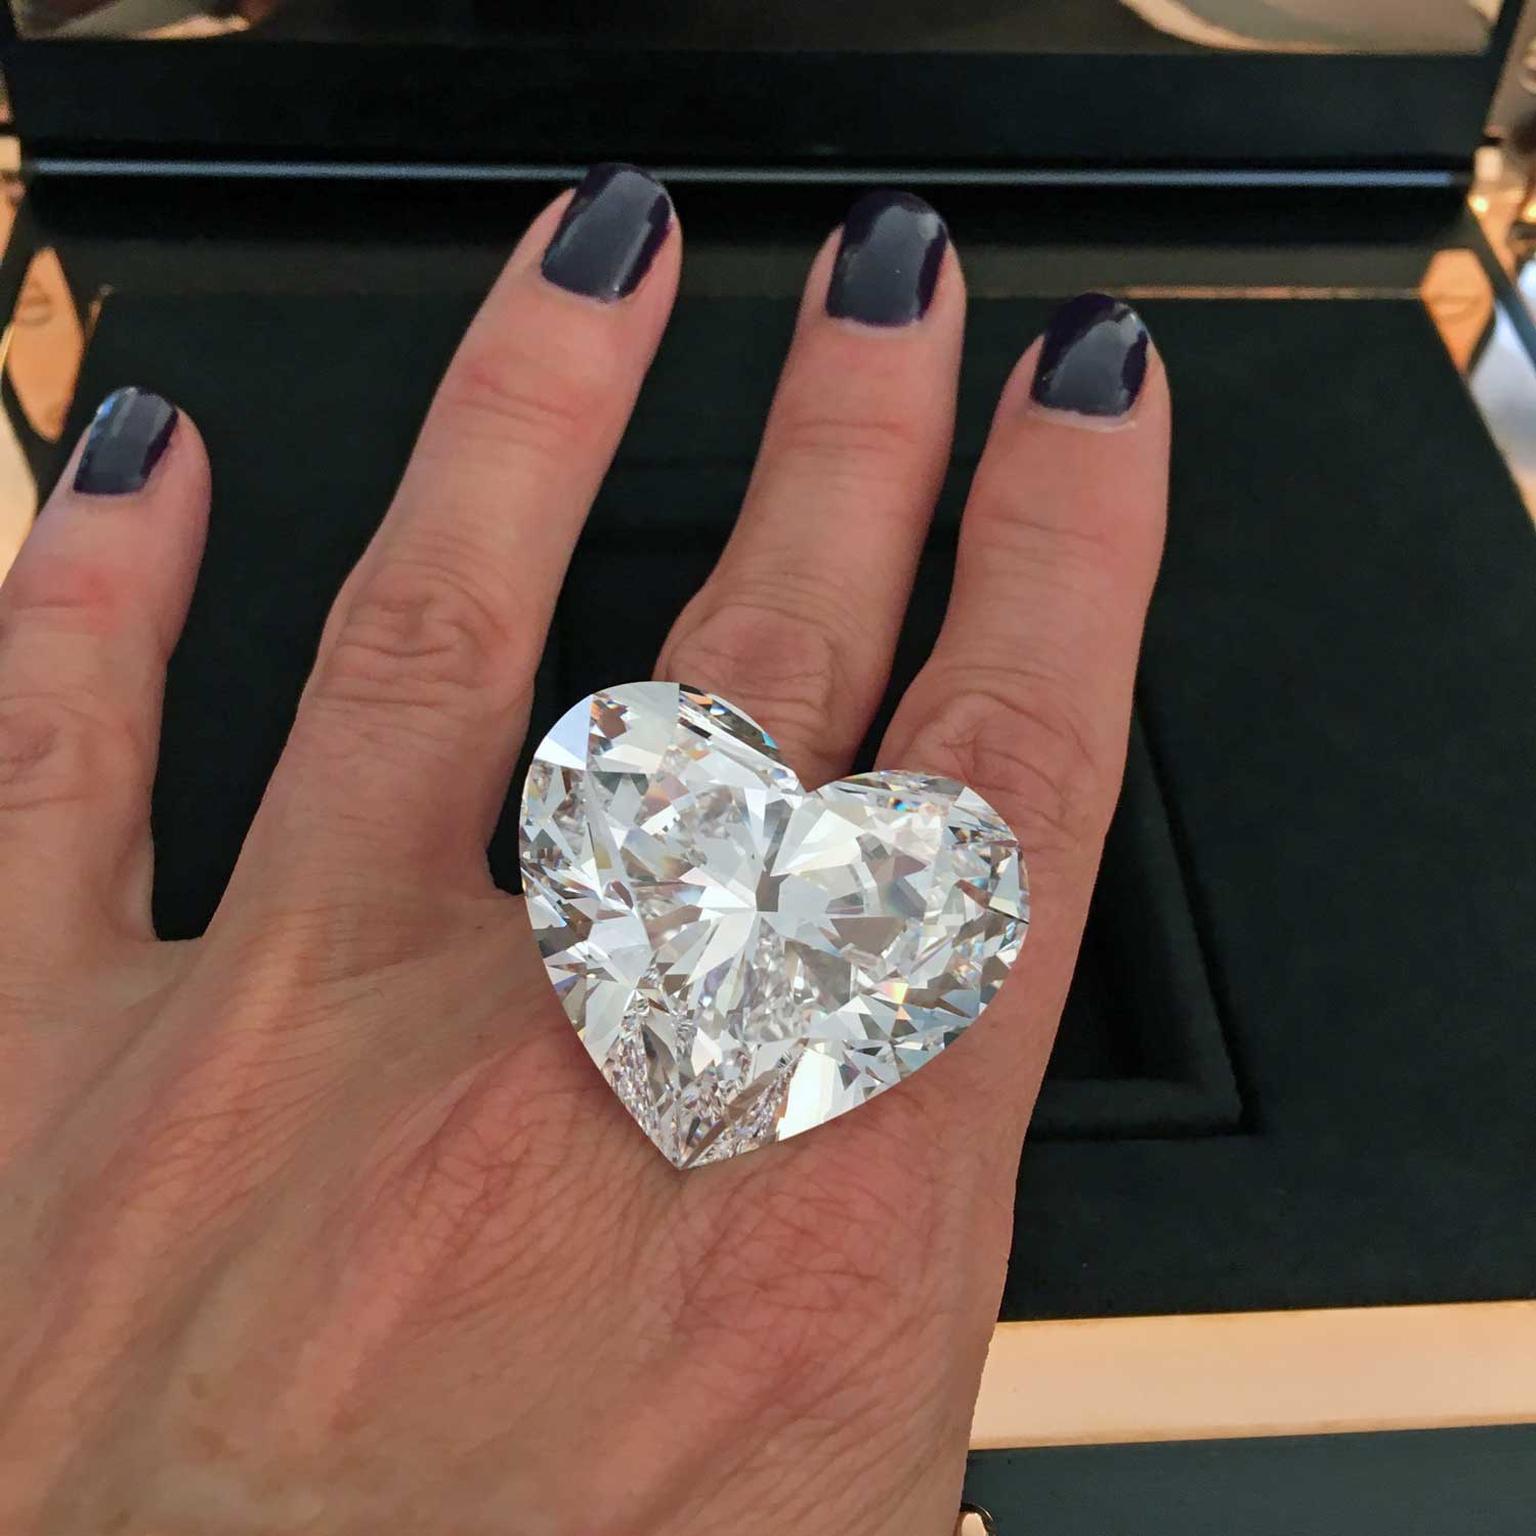 Graff Venus 118 carat flawless heart shape diamond